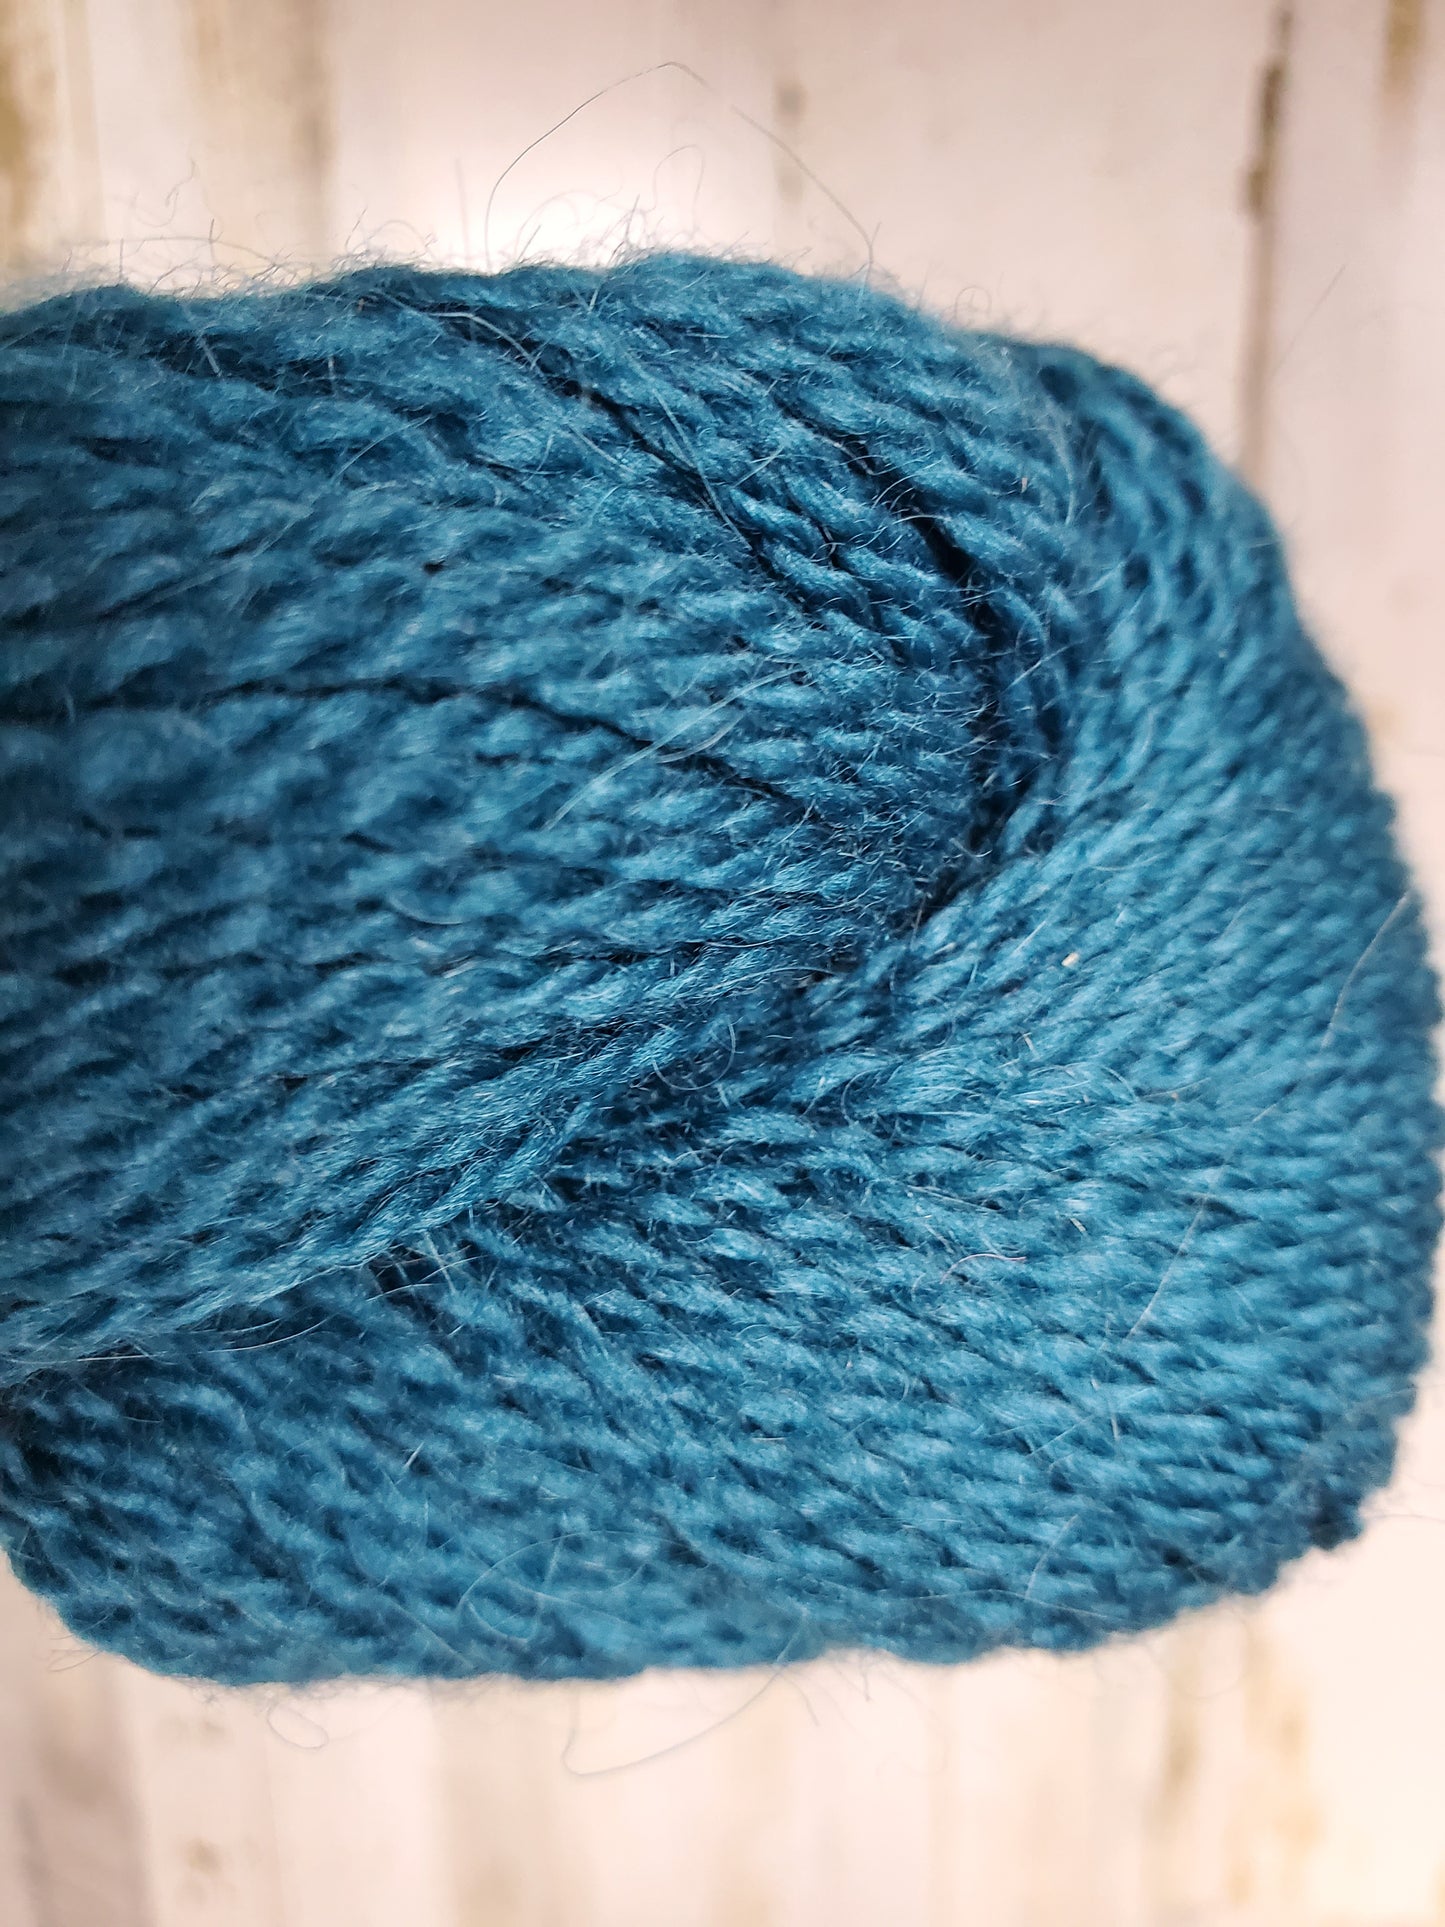 DK Yarn 80% Wool 20% Mohair